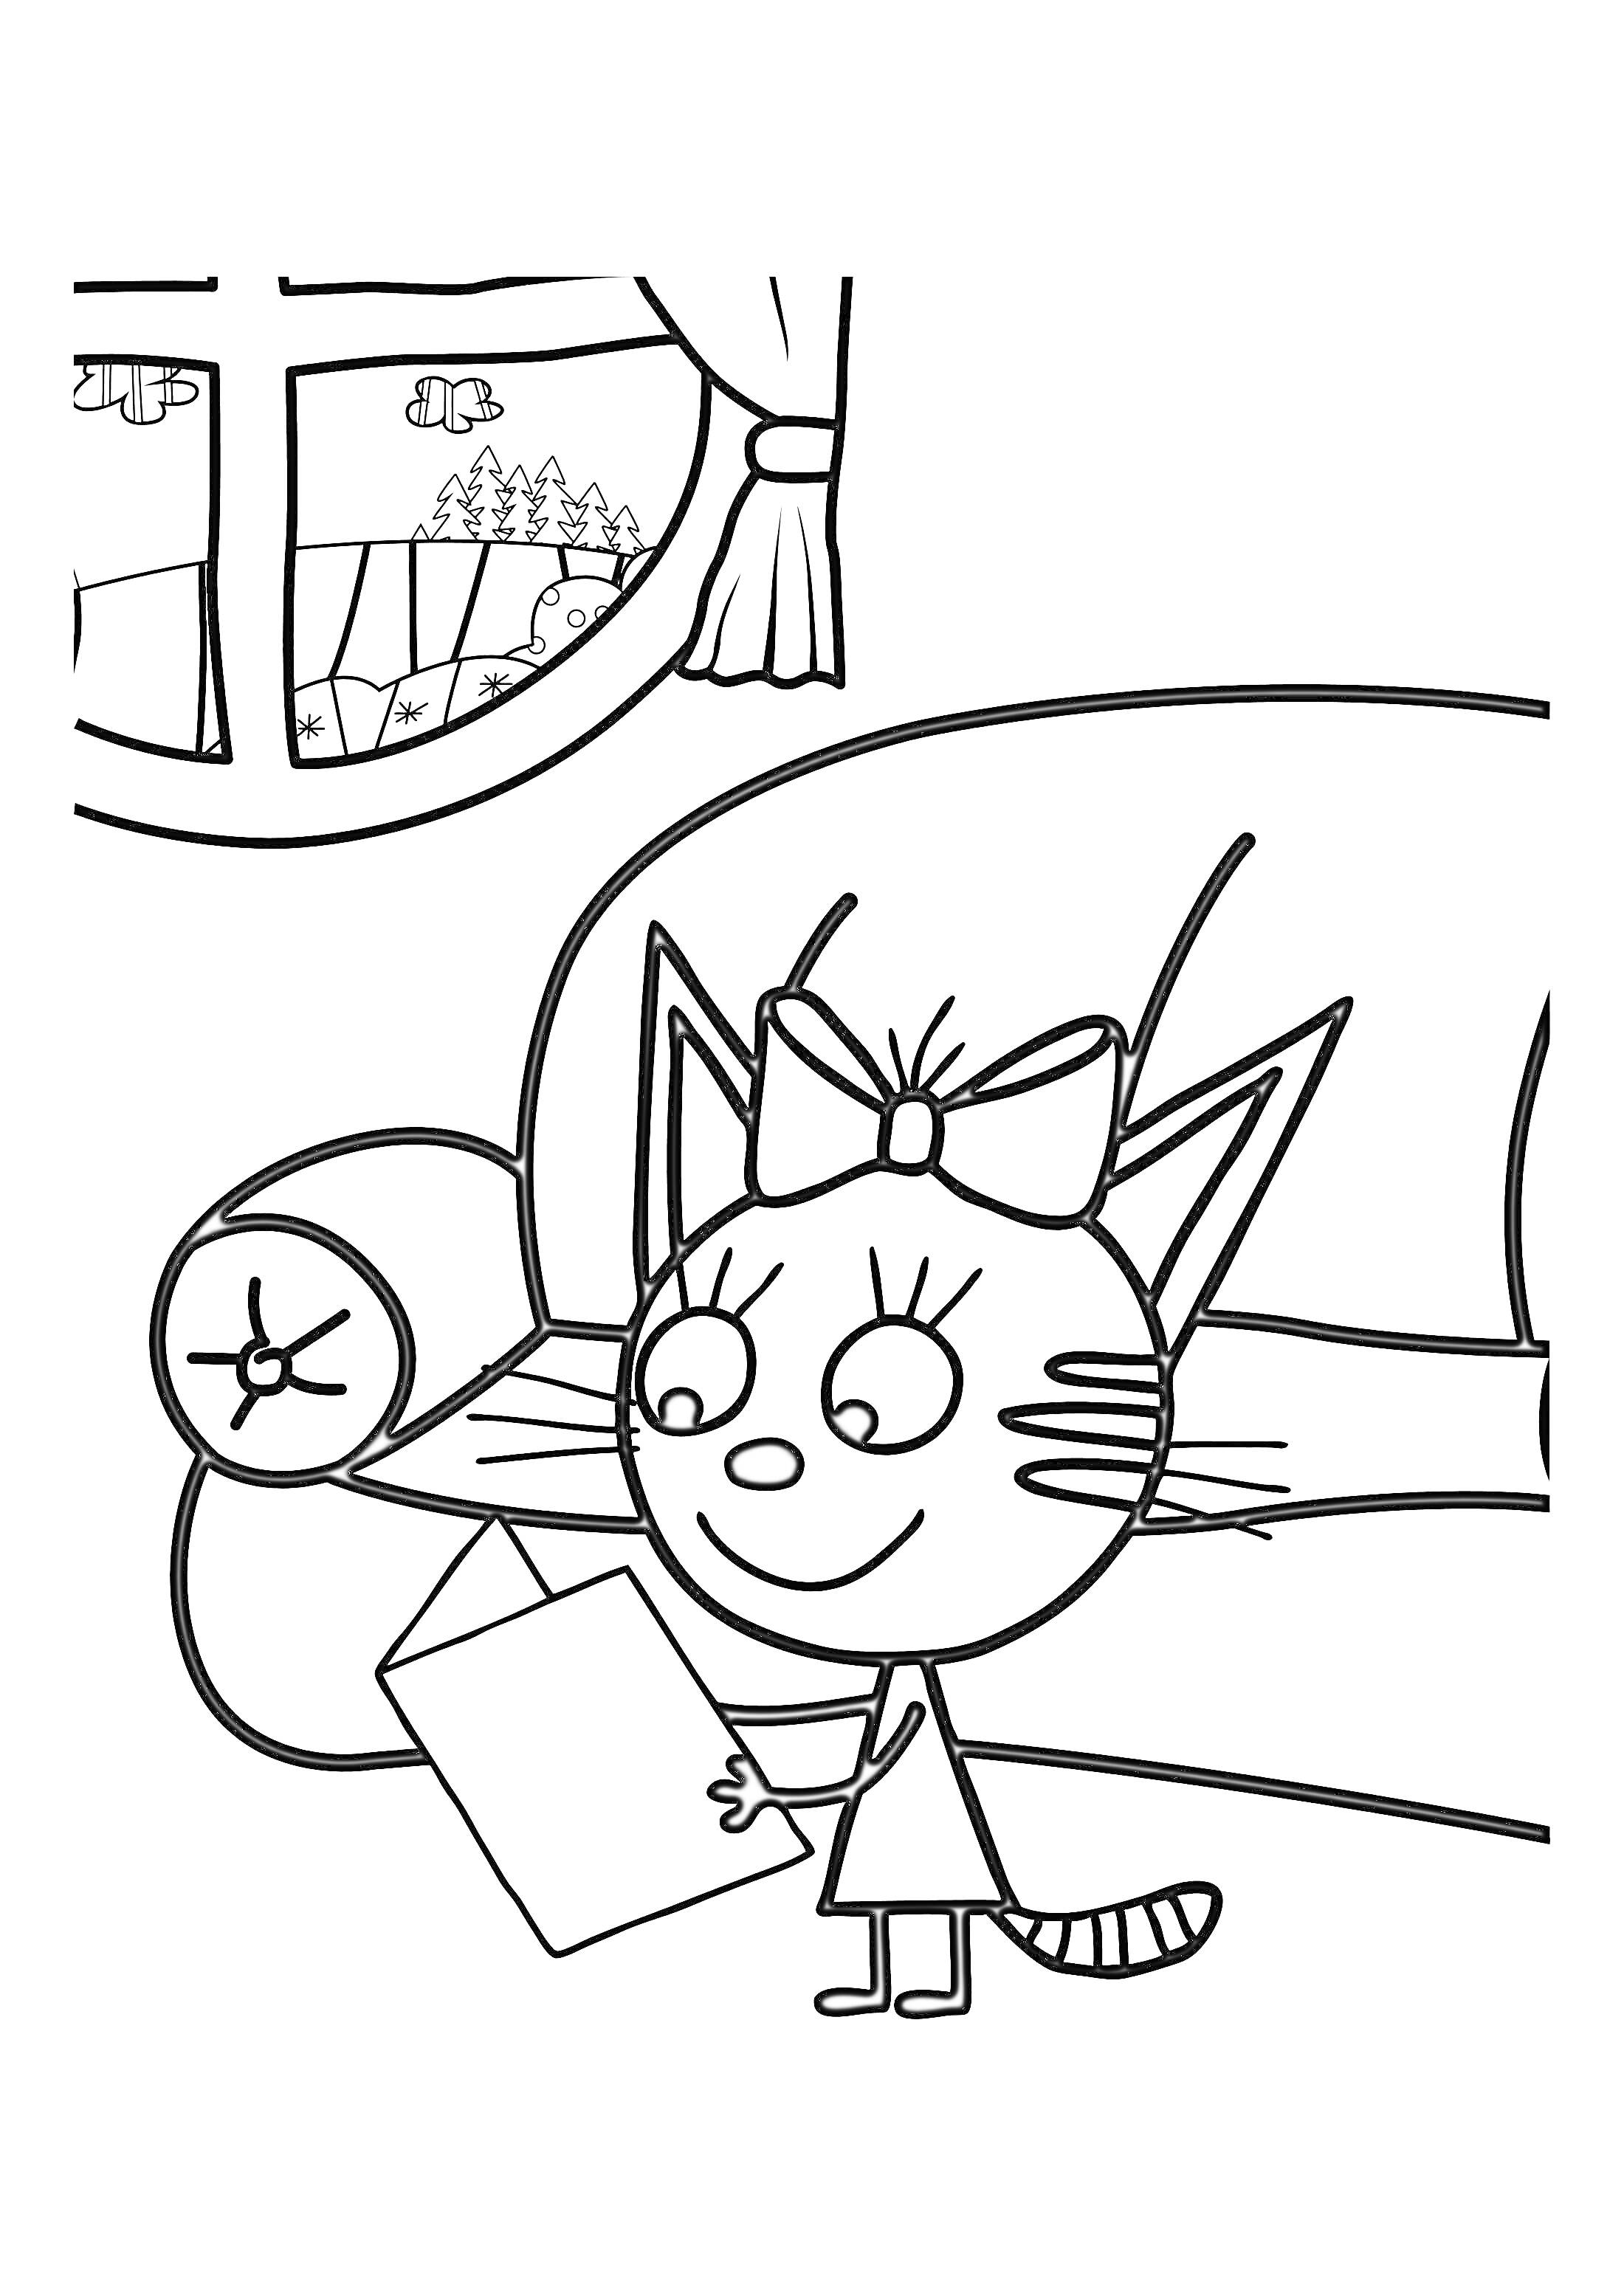 Раскраска Котёнок с бантом на диване, в руках лист бумаги, окно с видом на природу